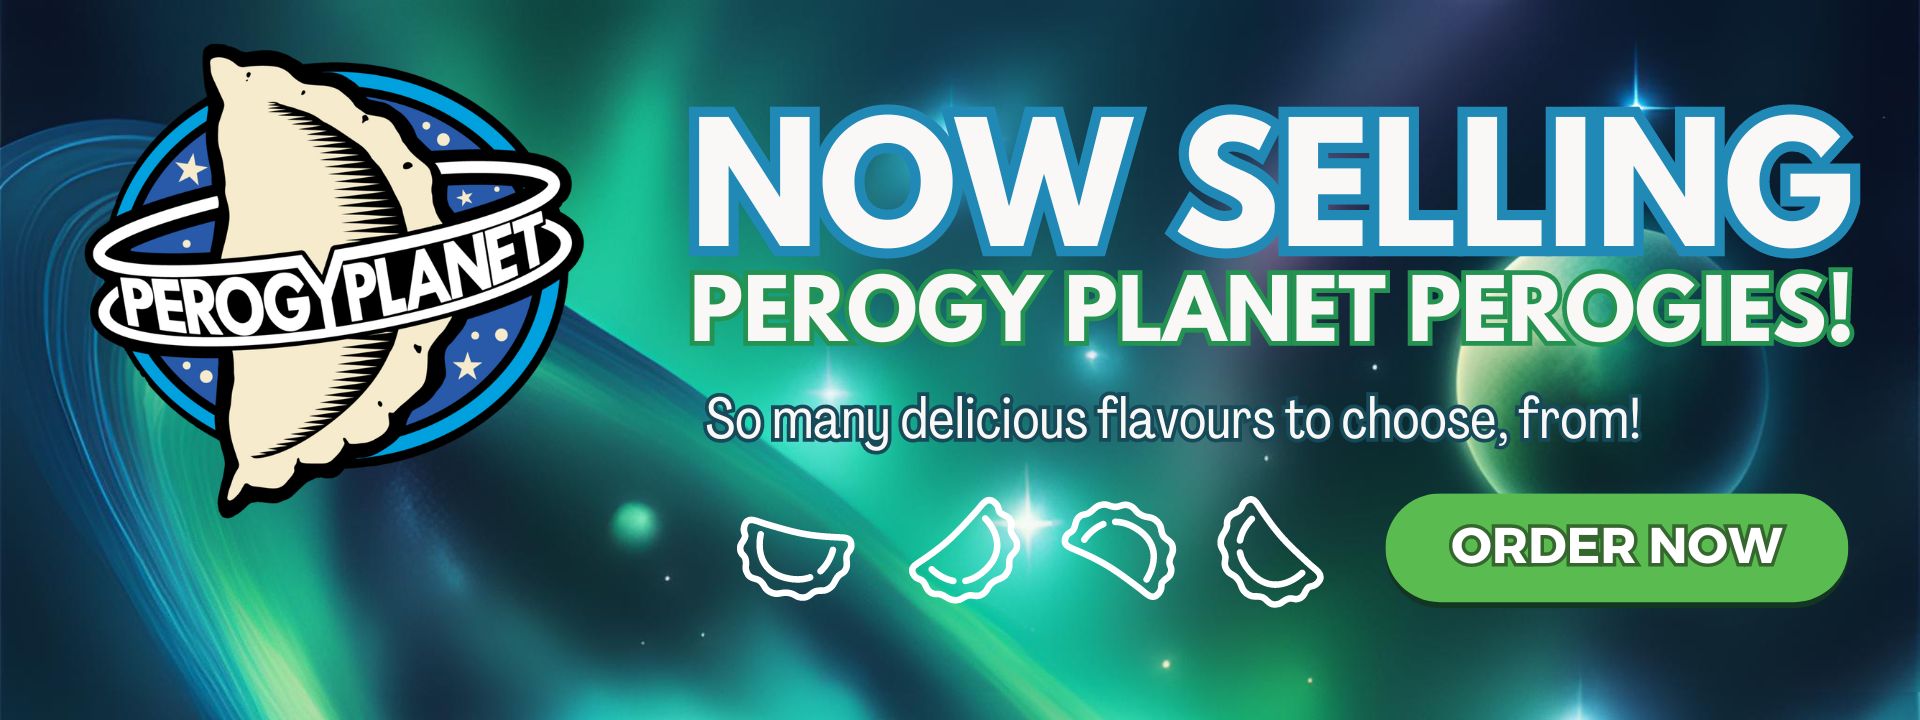 Now Selling Perogy Planet Perogies